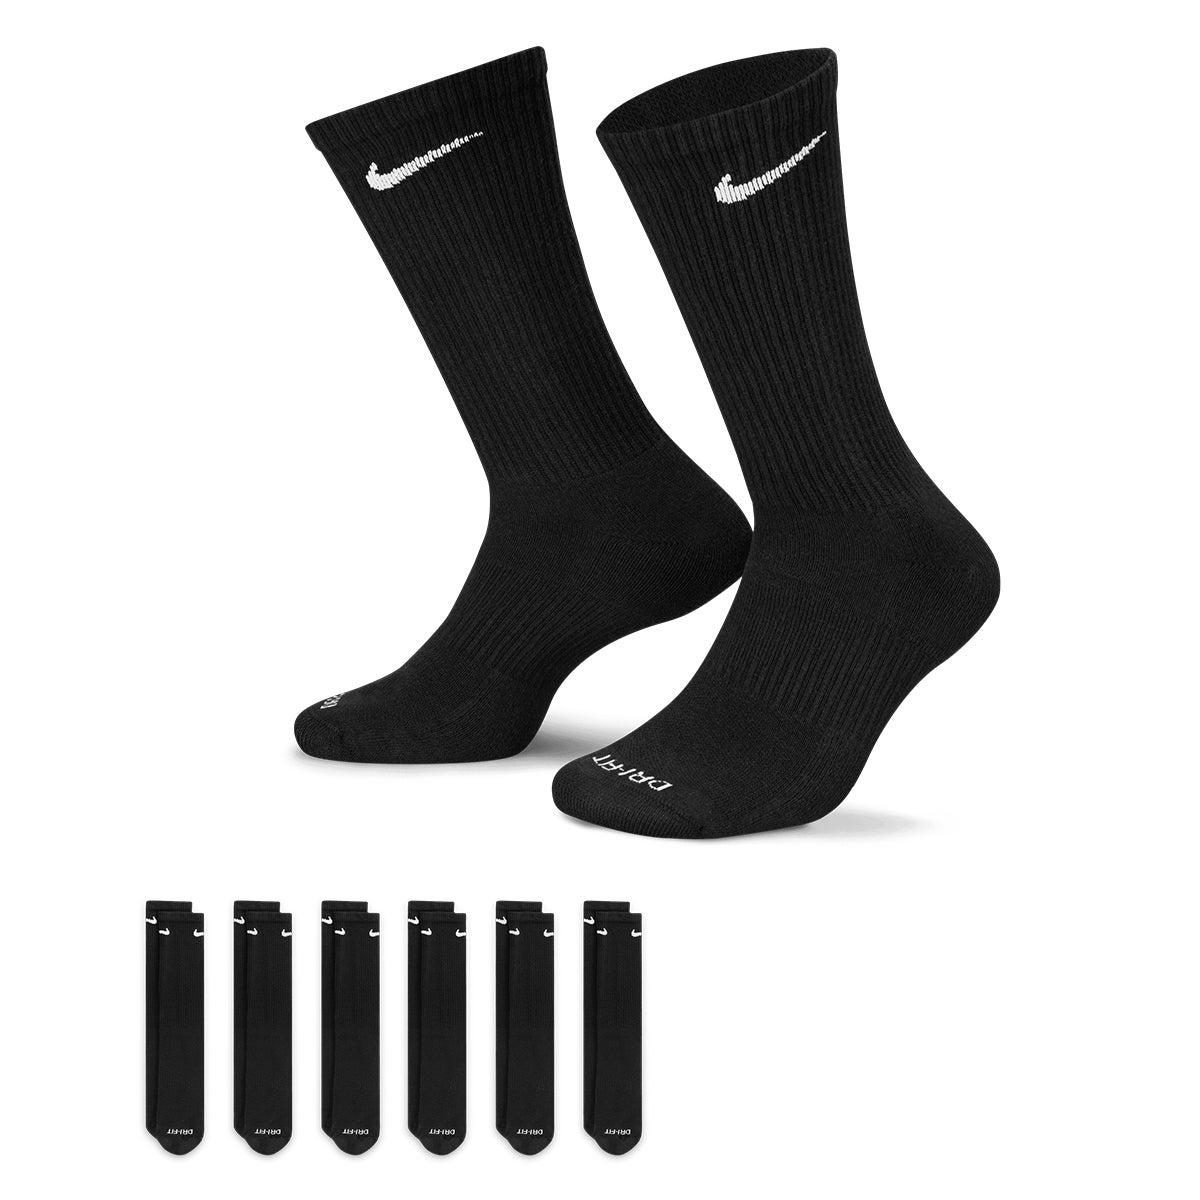 Nike Everyday Plus cushioned socks in white 6 pack